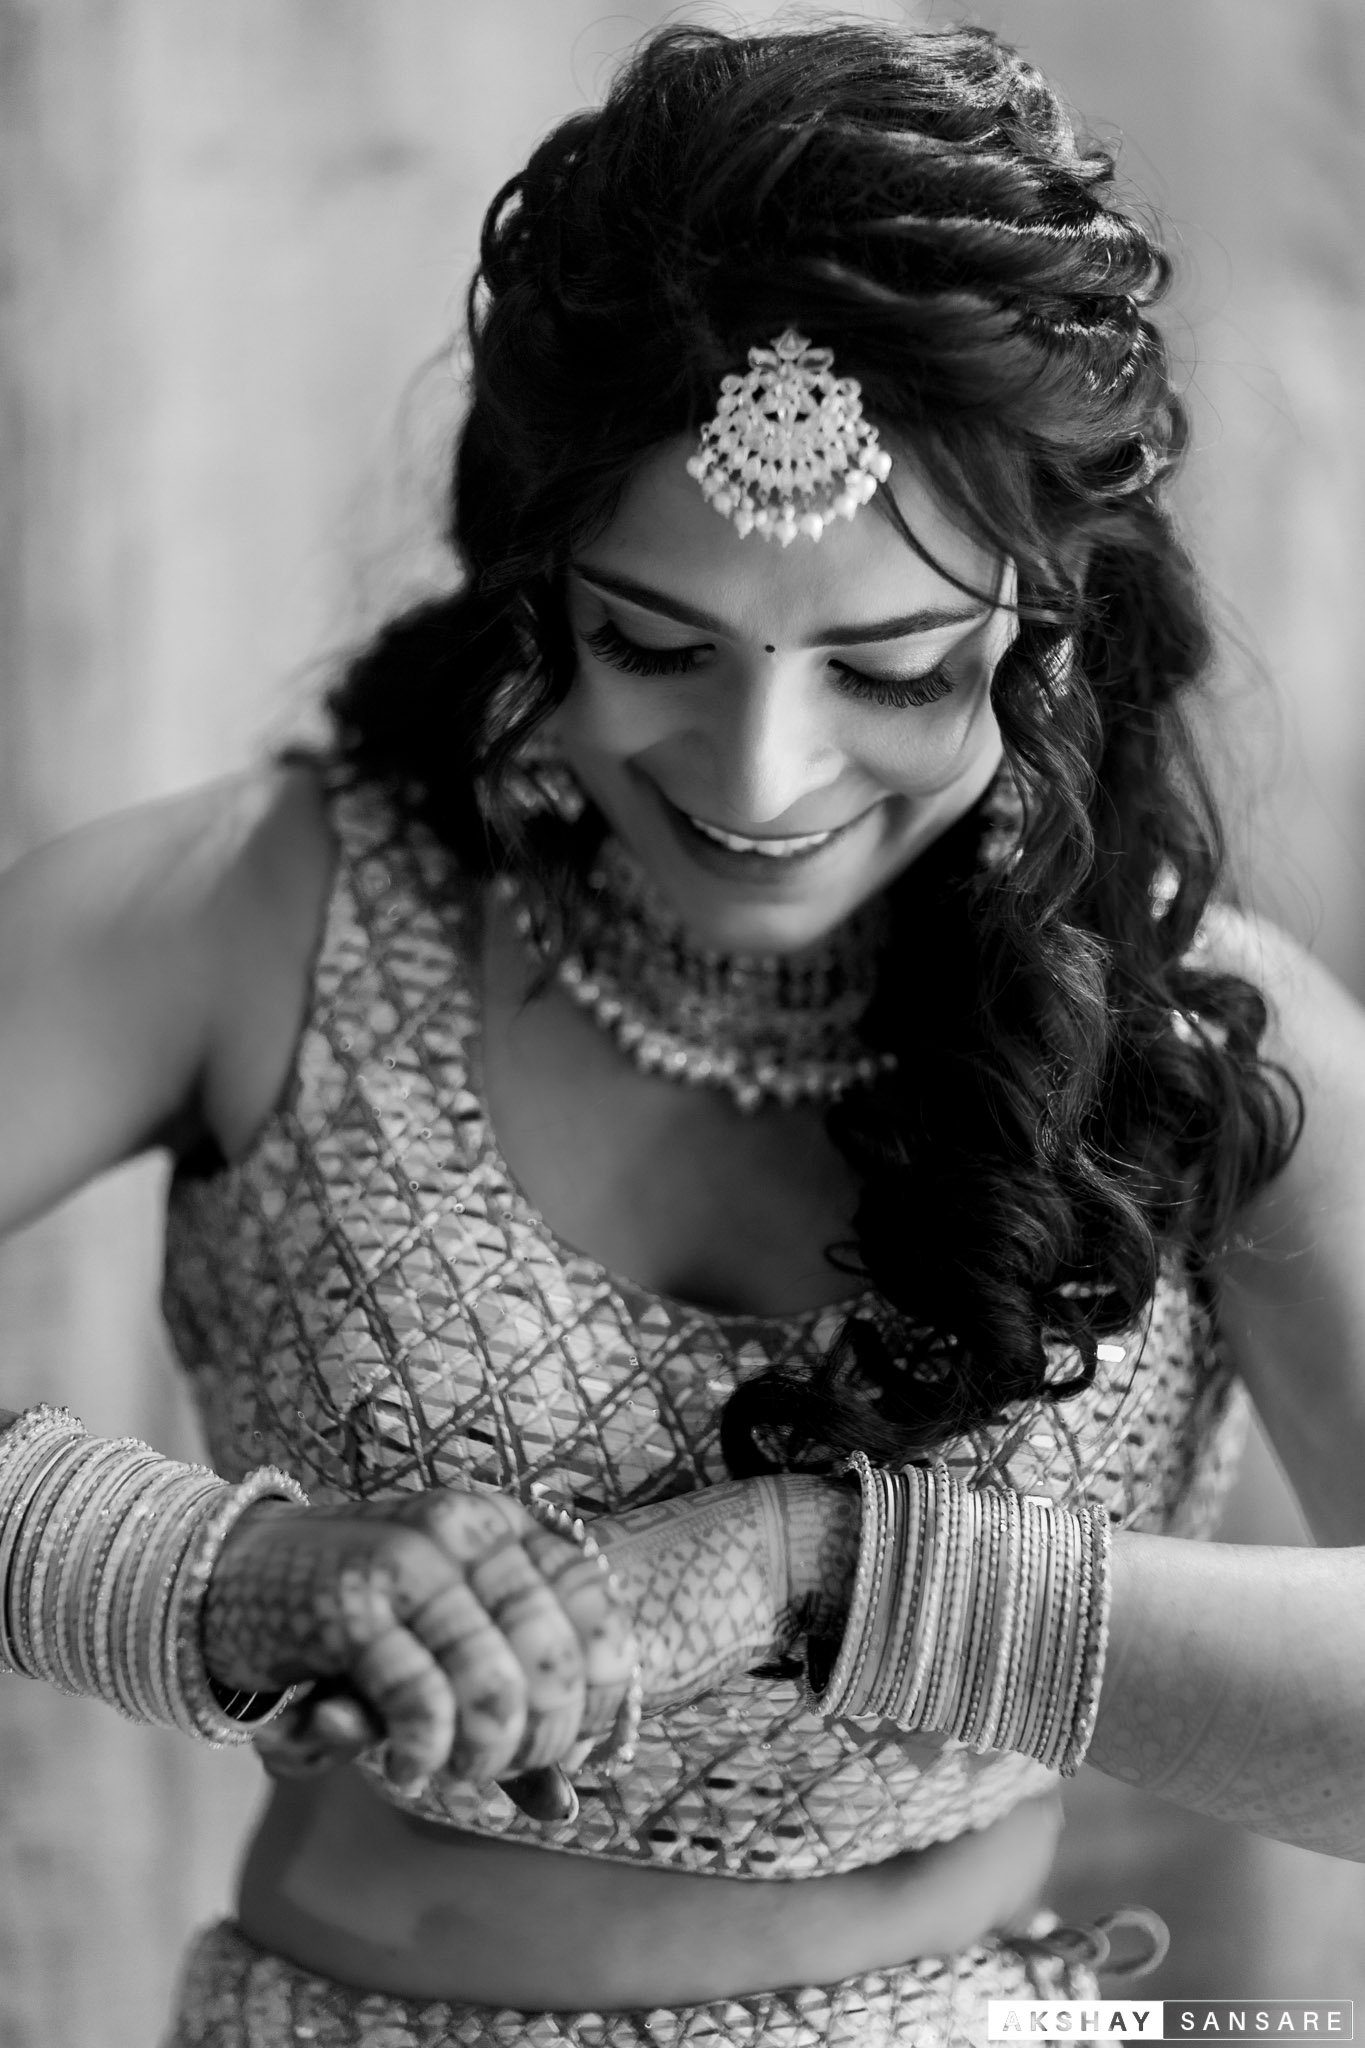 Lipika x Bhavya Compress Akshay Sansare Photography & Films Best wedding photographers in mumbai india-6.jpg